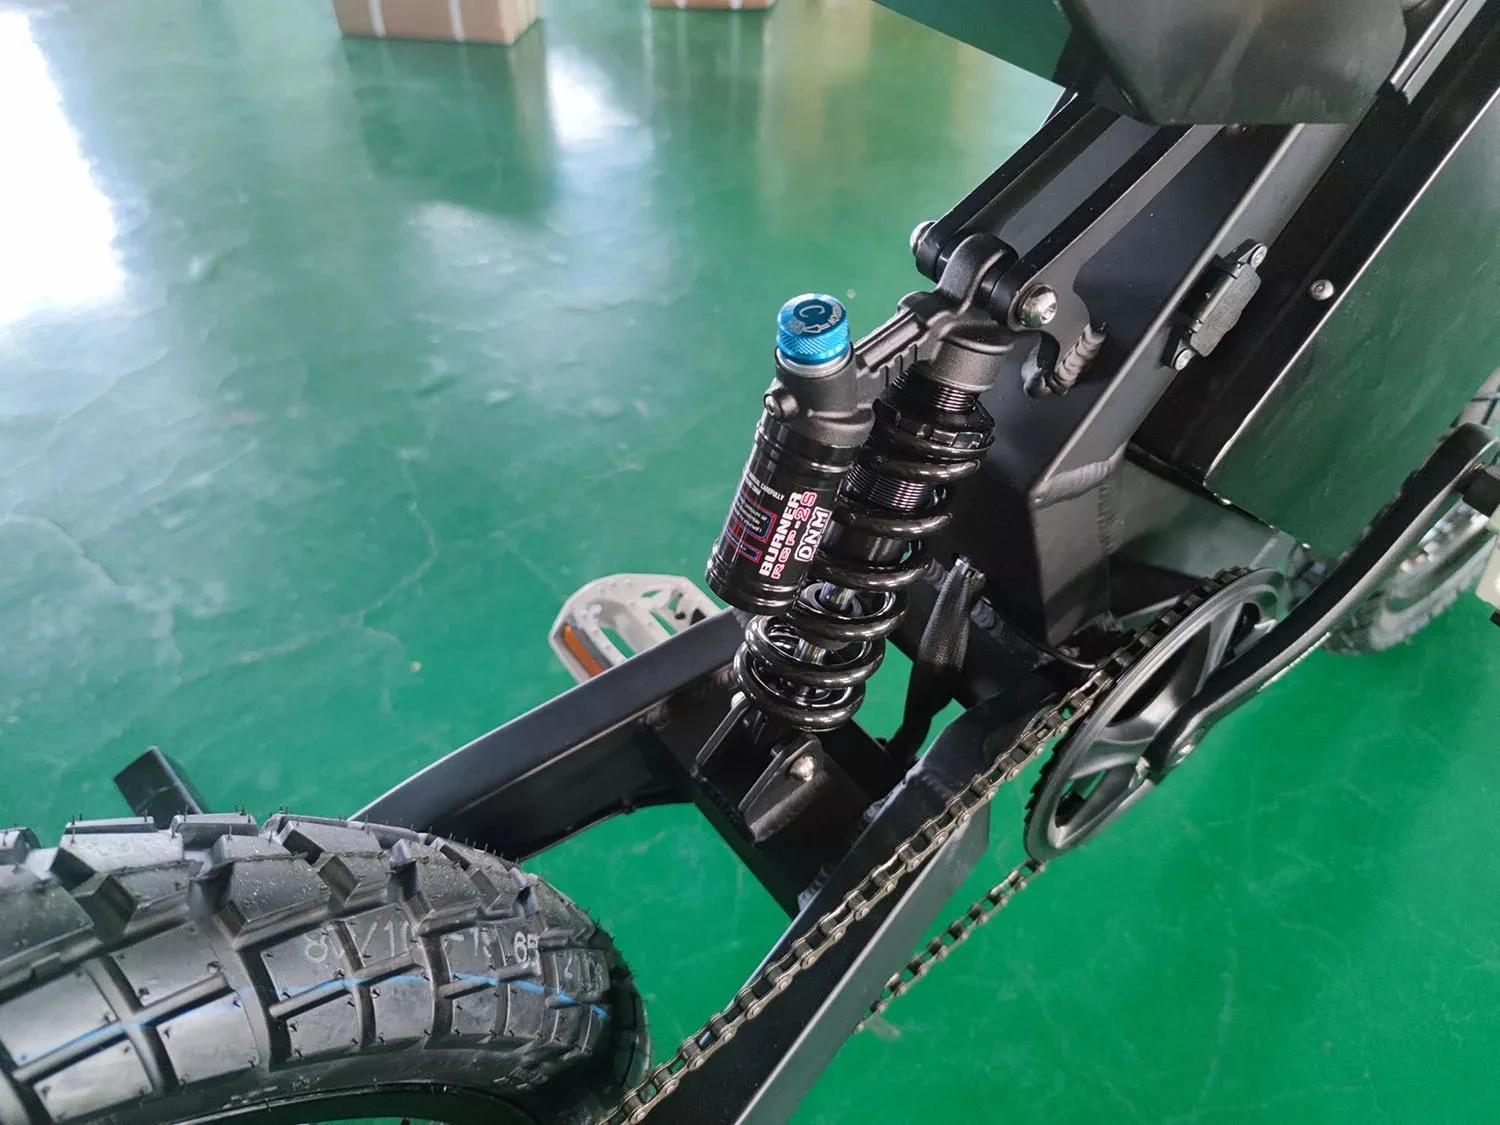 CS20 brushless enduro ebike bomber electric bike 3000w with wholesale price